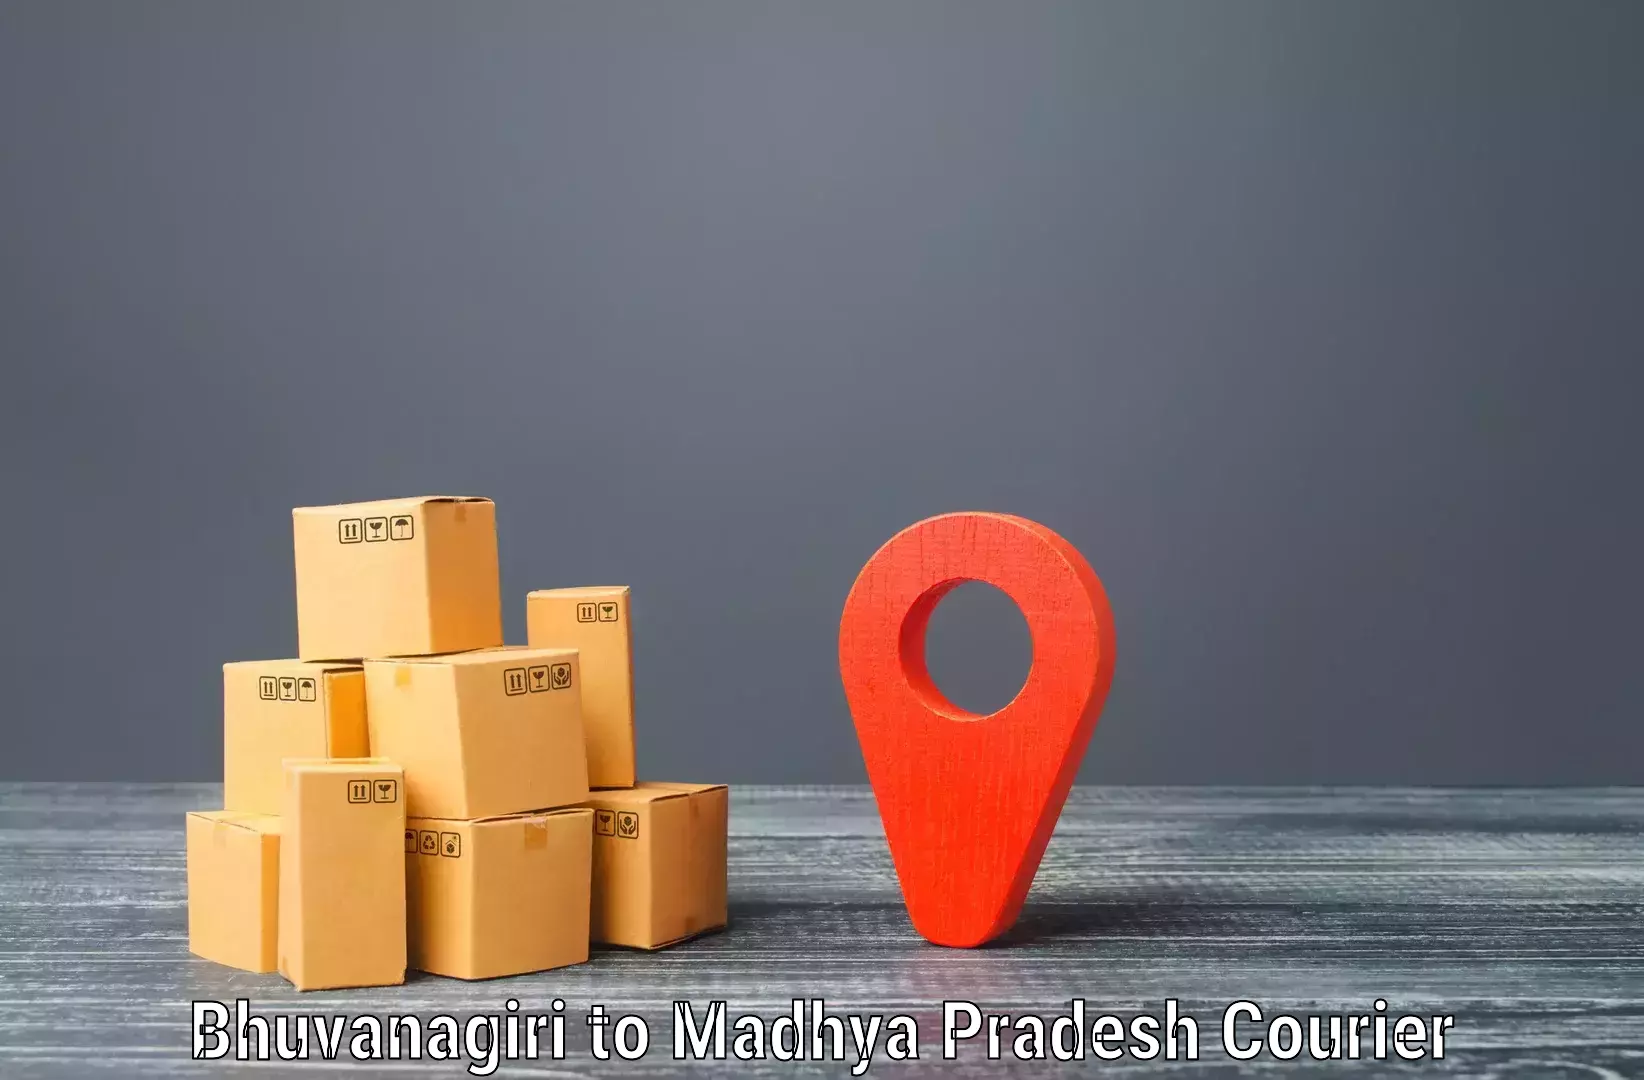 Global logistics network Bhuvanagiri to Athner